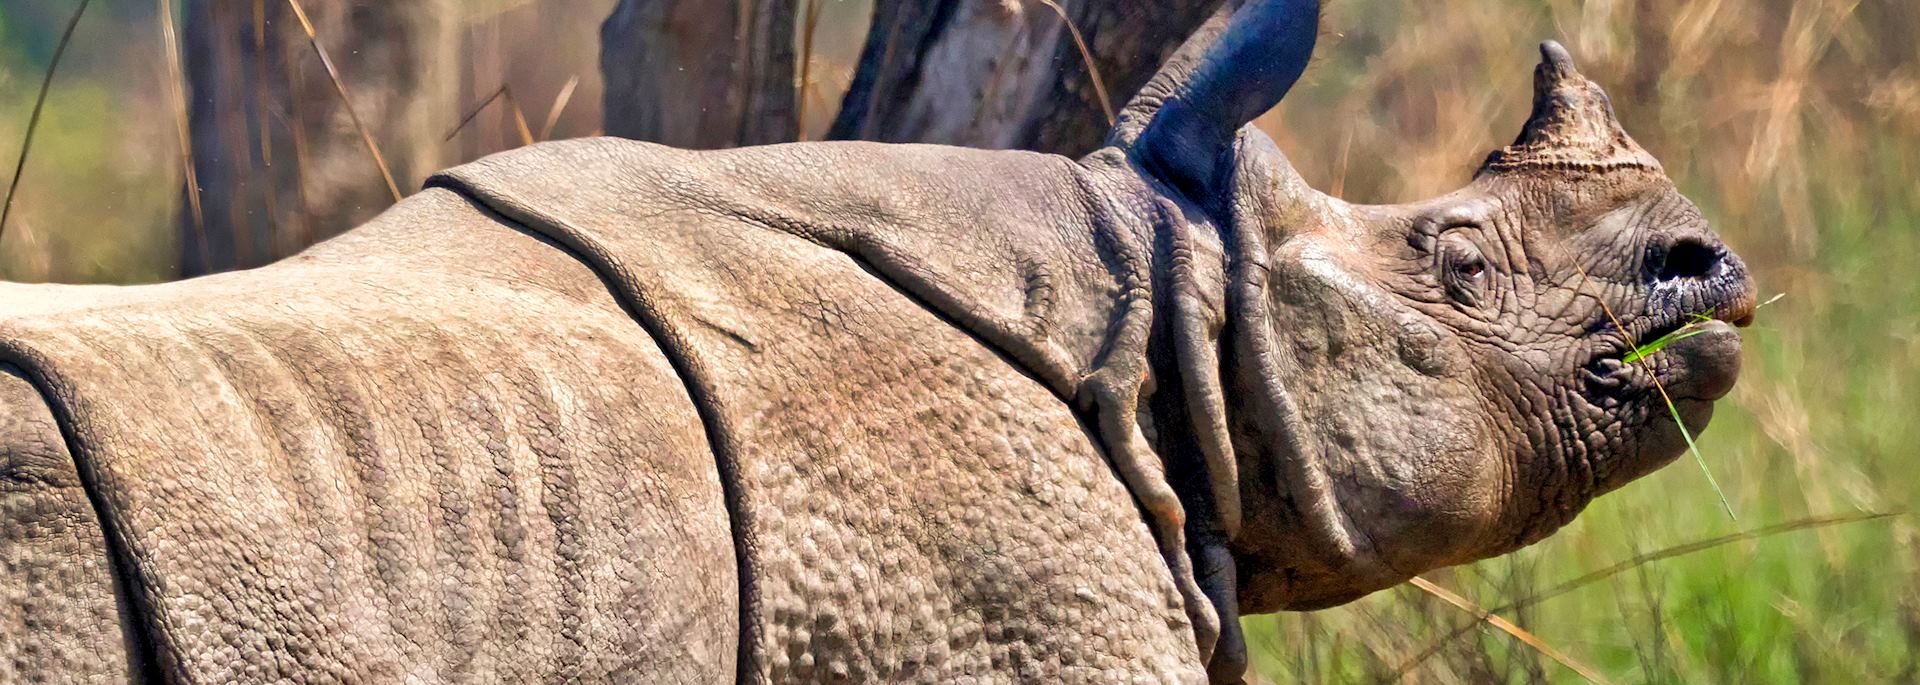 One-horned rhino in Bardia National Park